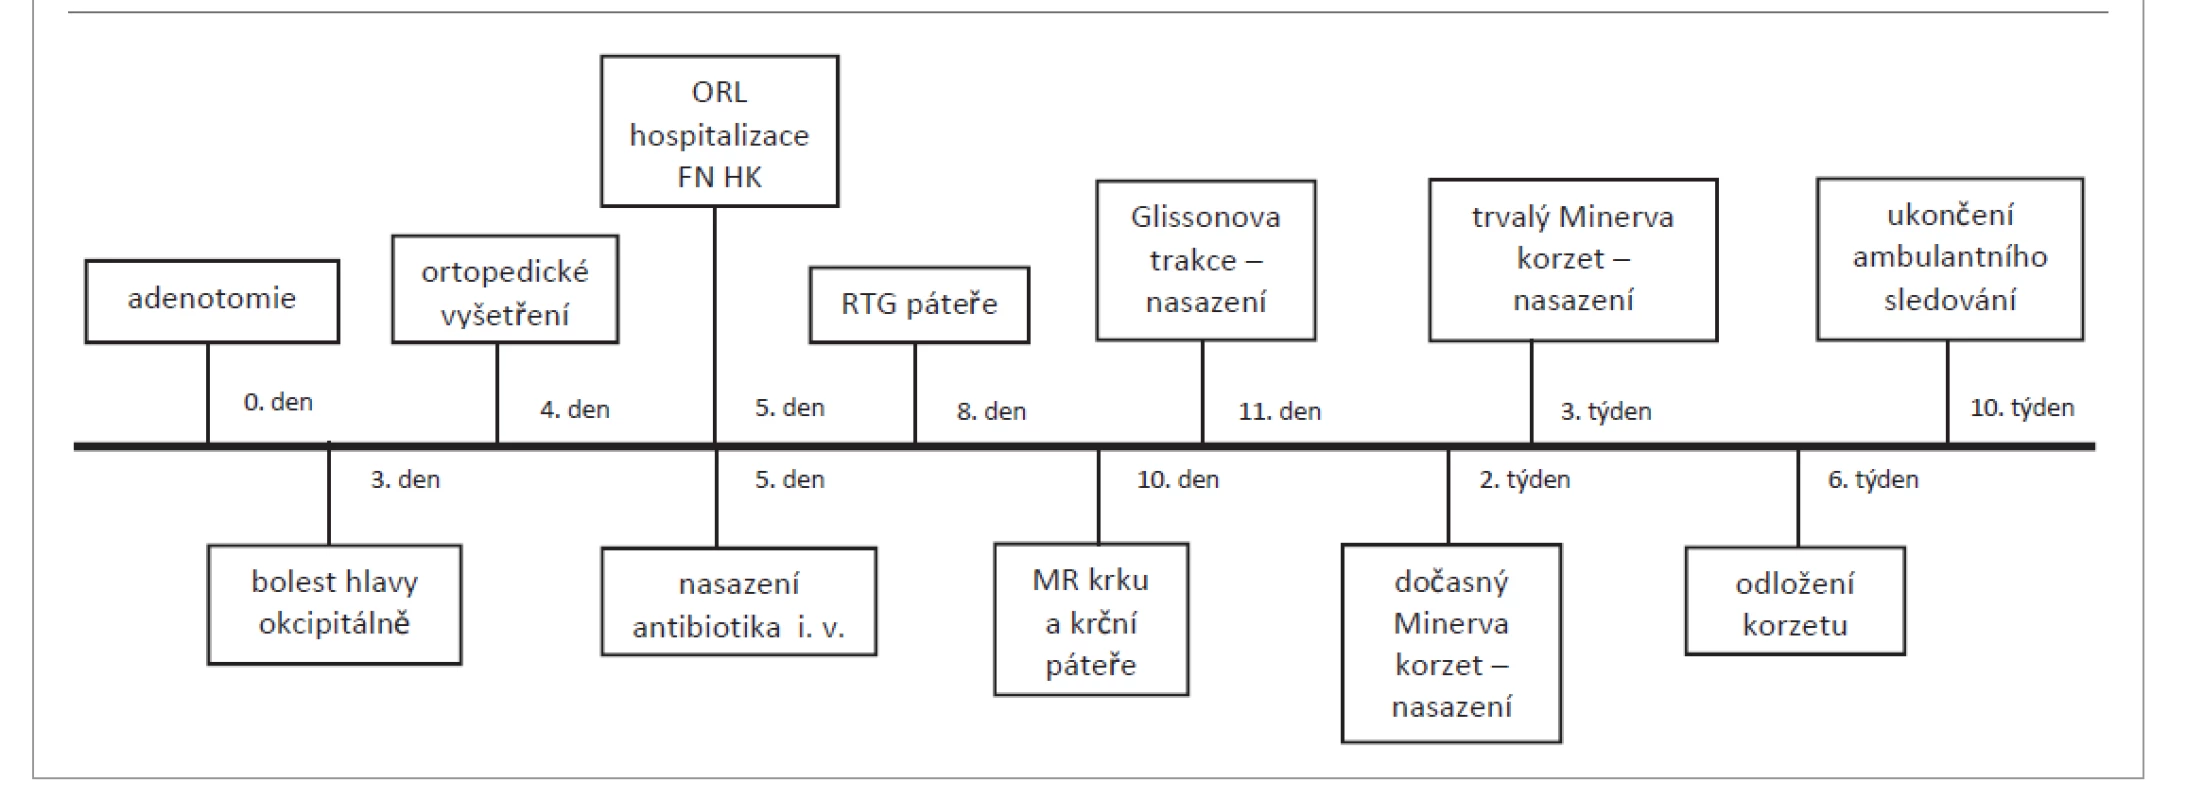 Časová osa pacienta s Griselovým syndromem.<br>
Tab. 1. Timeline of a patient with Grisel’s syndrome.